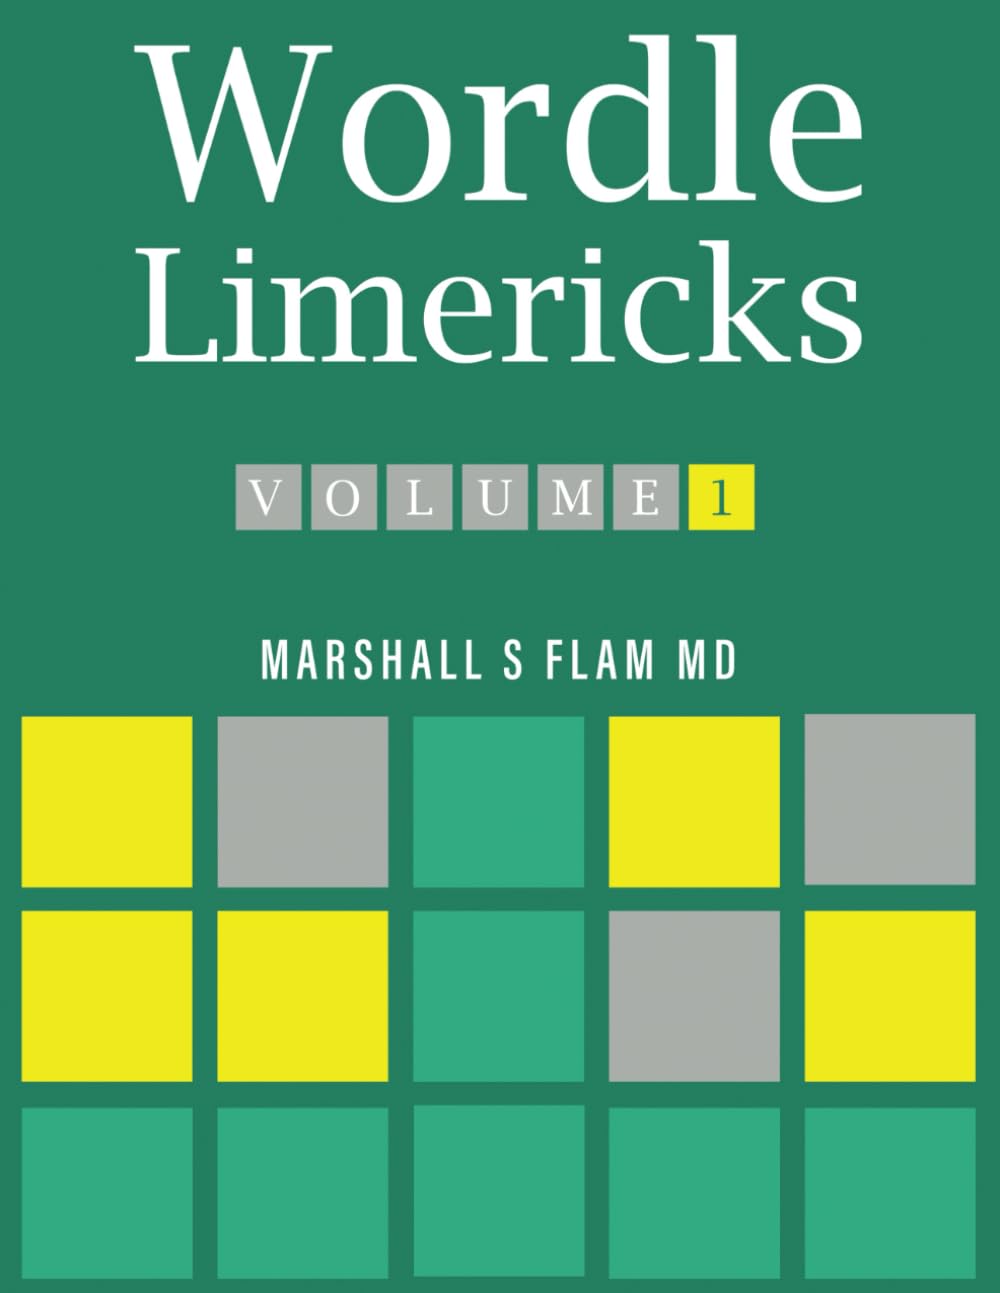 Dr. Marshall S Flam’s “Wordle Limericks Flamericks” Will Be Exhibited